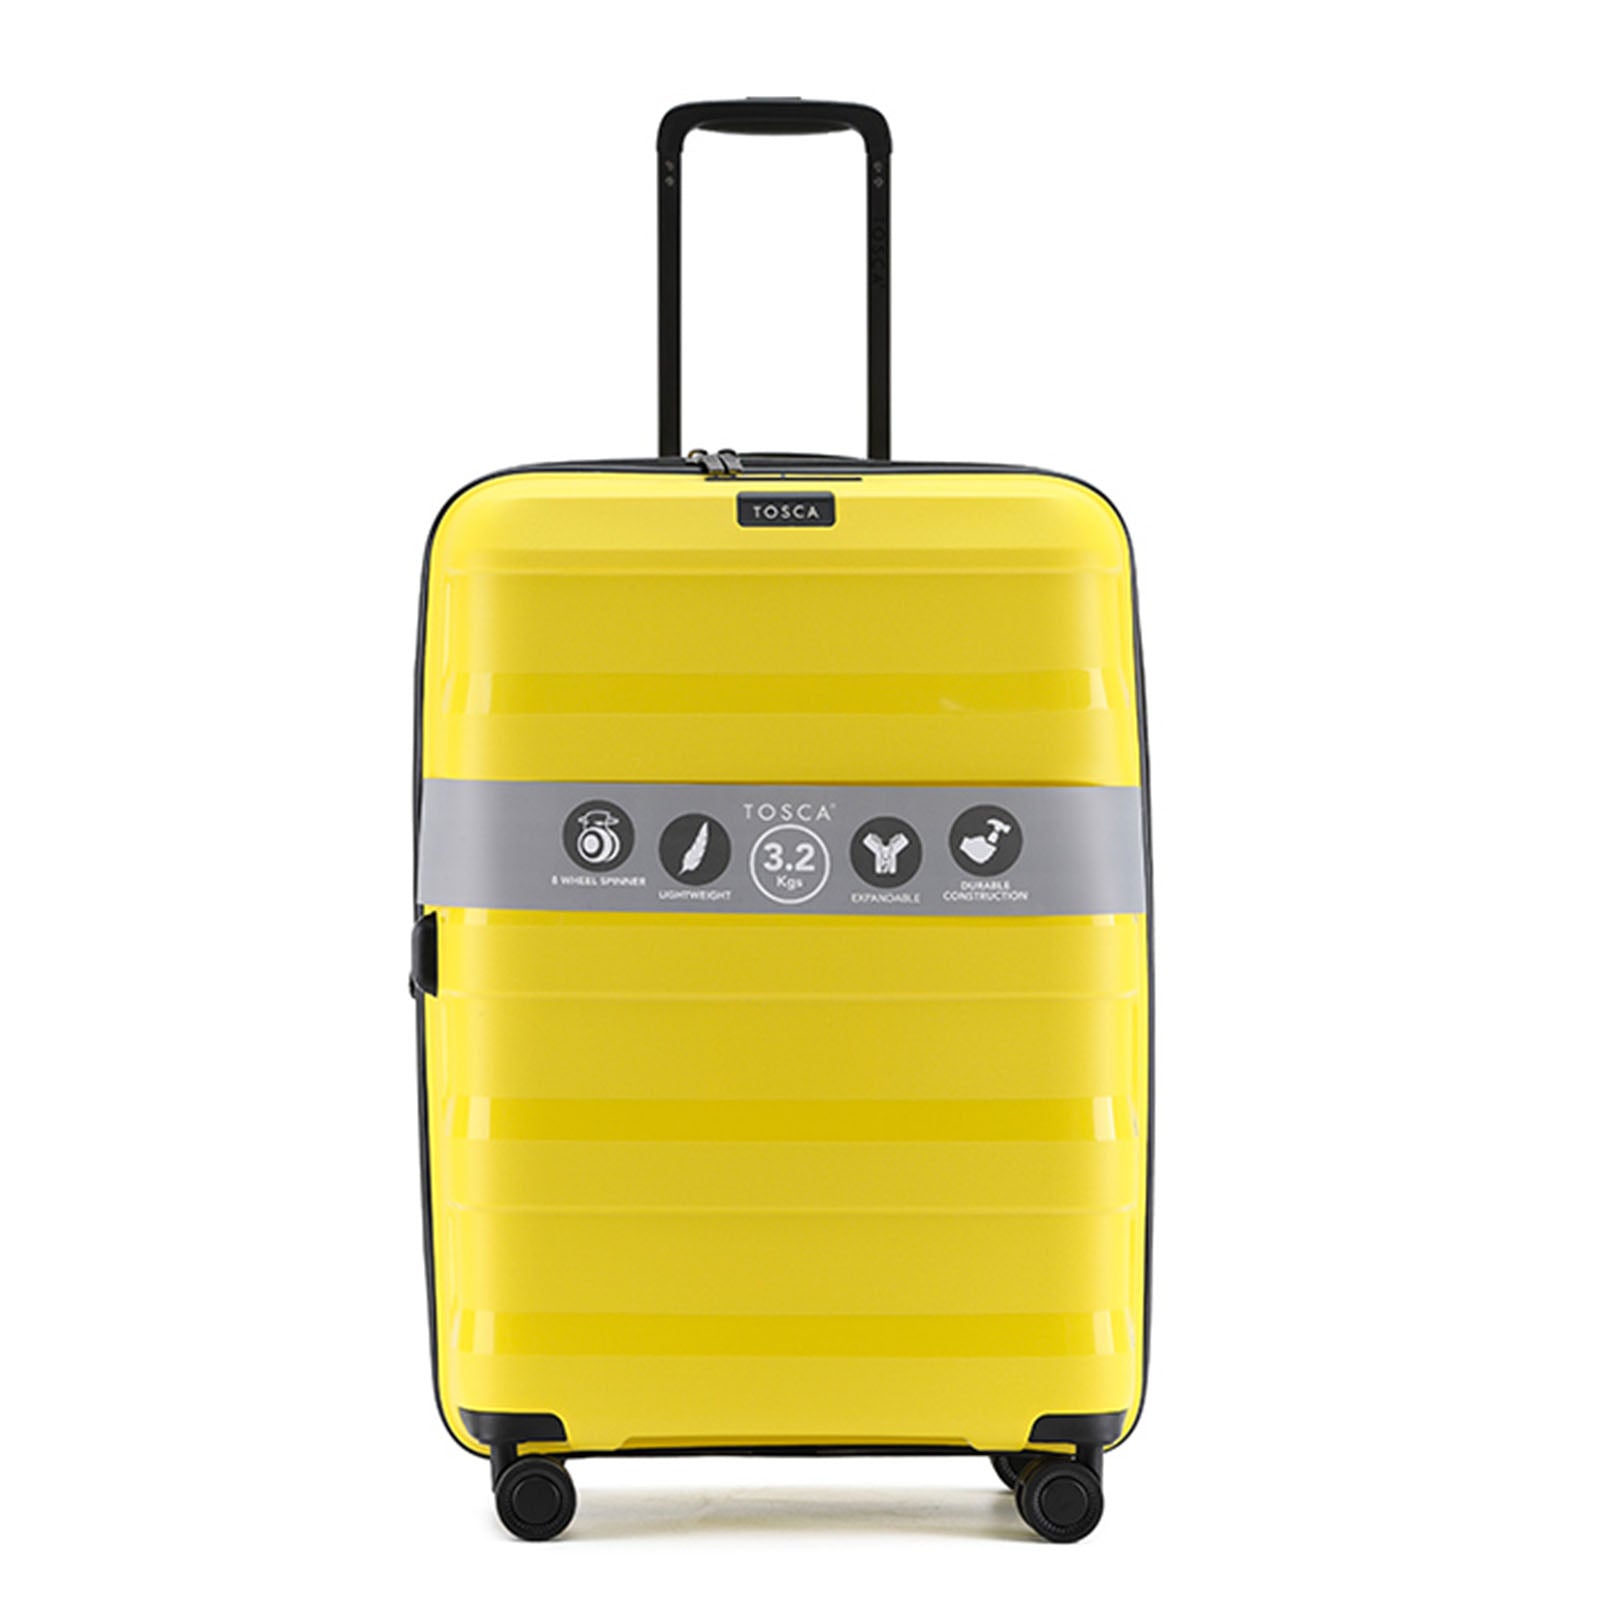 Tosca-Comet-4-Wheel-67cm-Medium-Suitcase-Yellow-Front